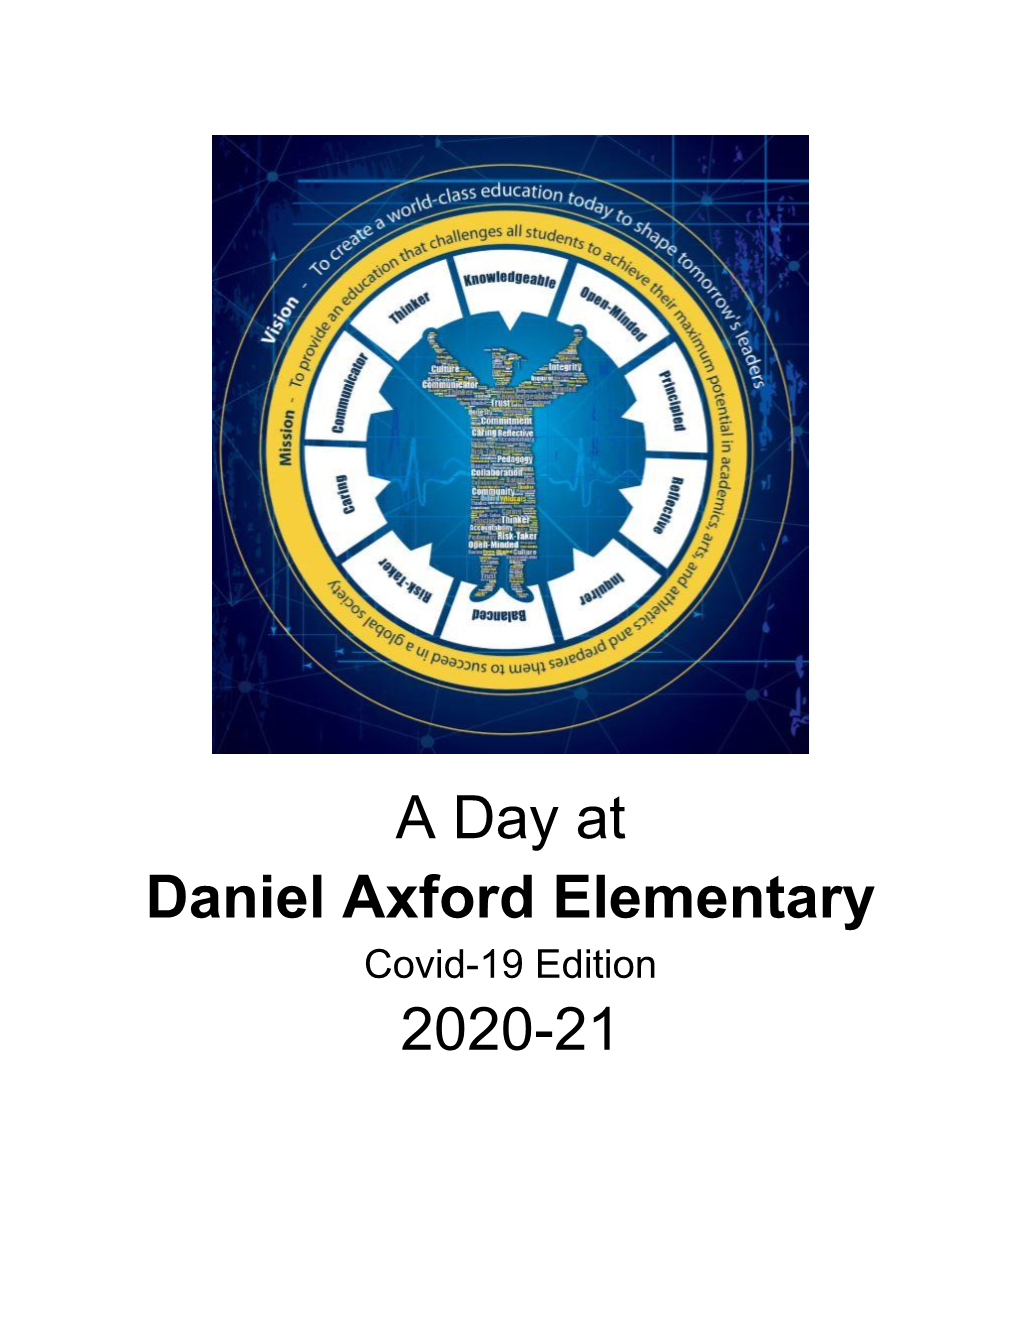 A Day at Daniel Axford Elementary 2020-21